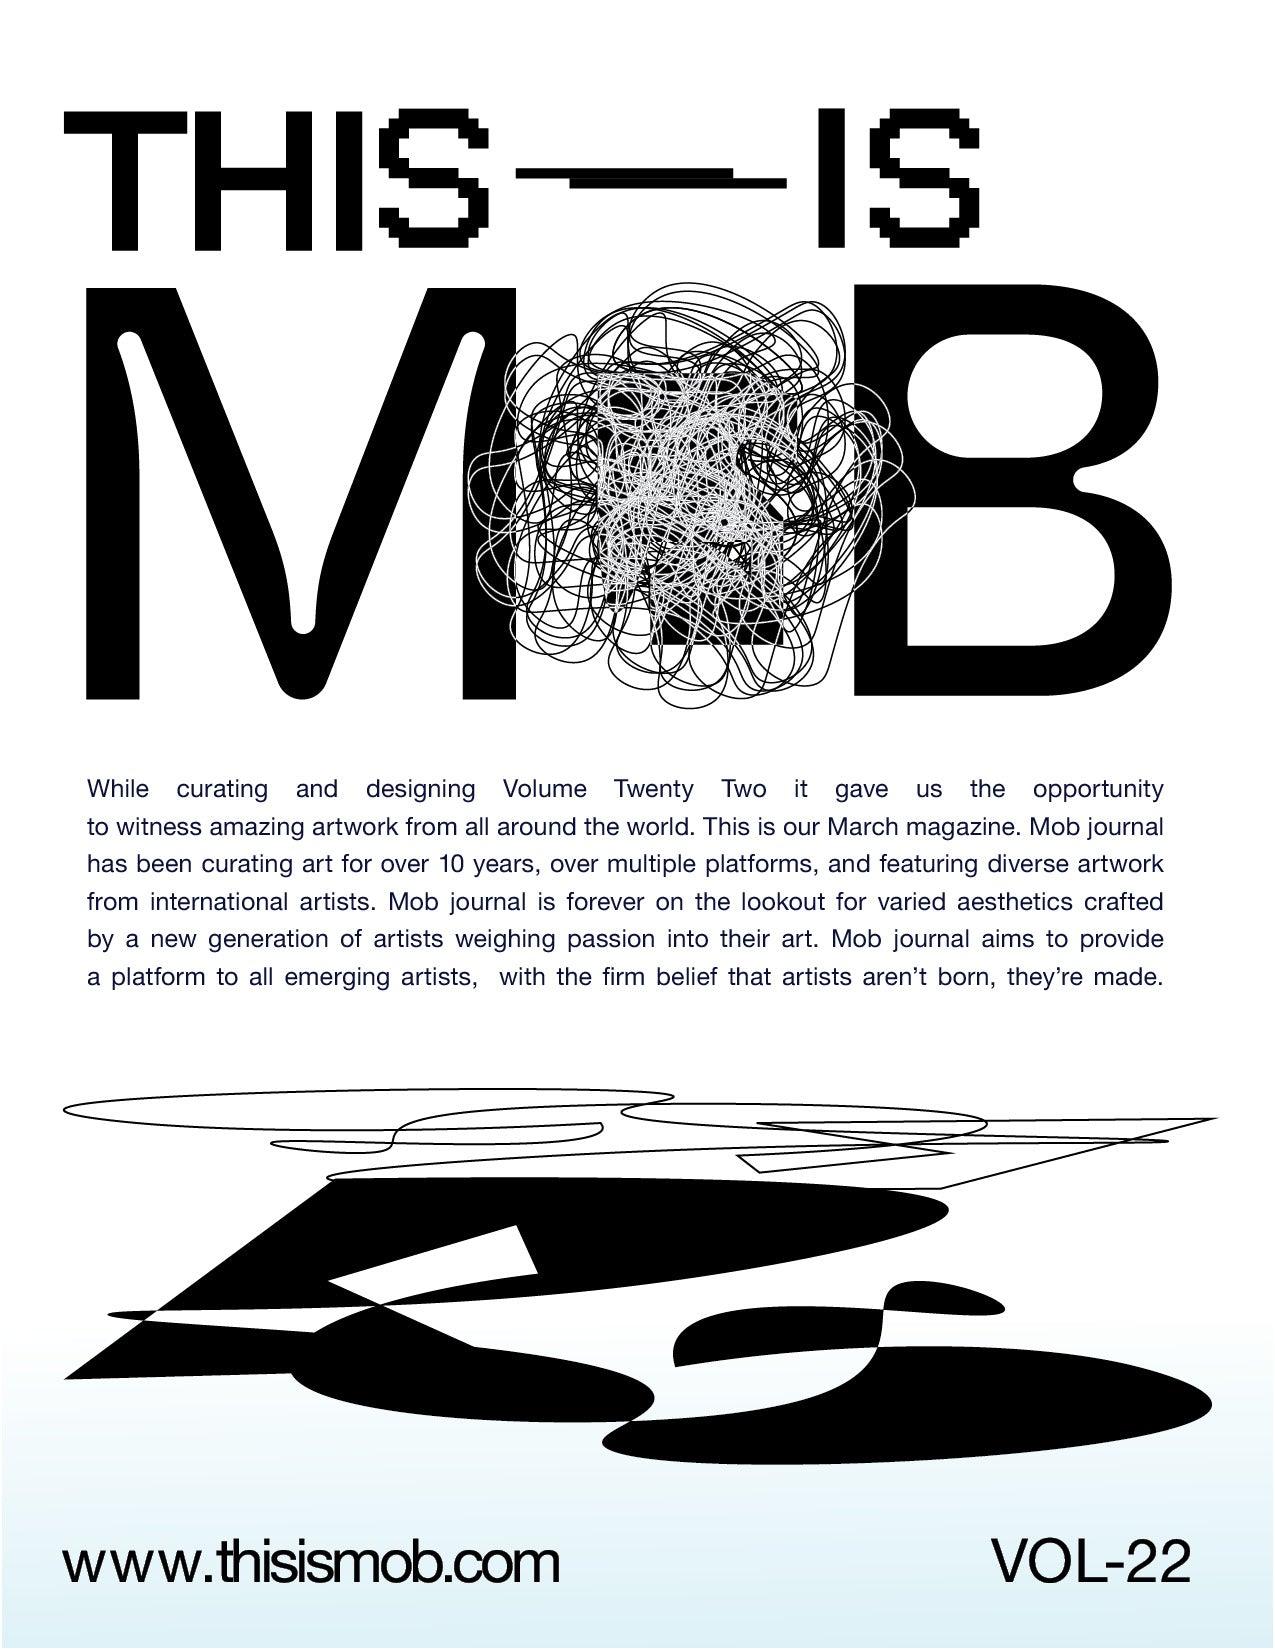 MOB JOURNAL | VOLUME TWENTY TWO | ISSUE #42 - Mob Journal